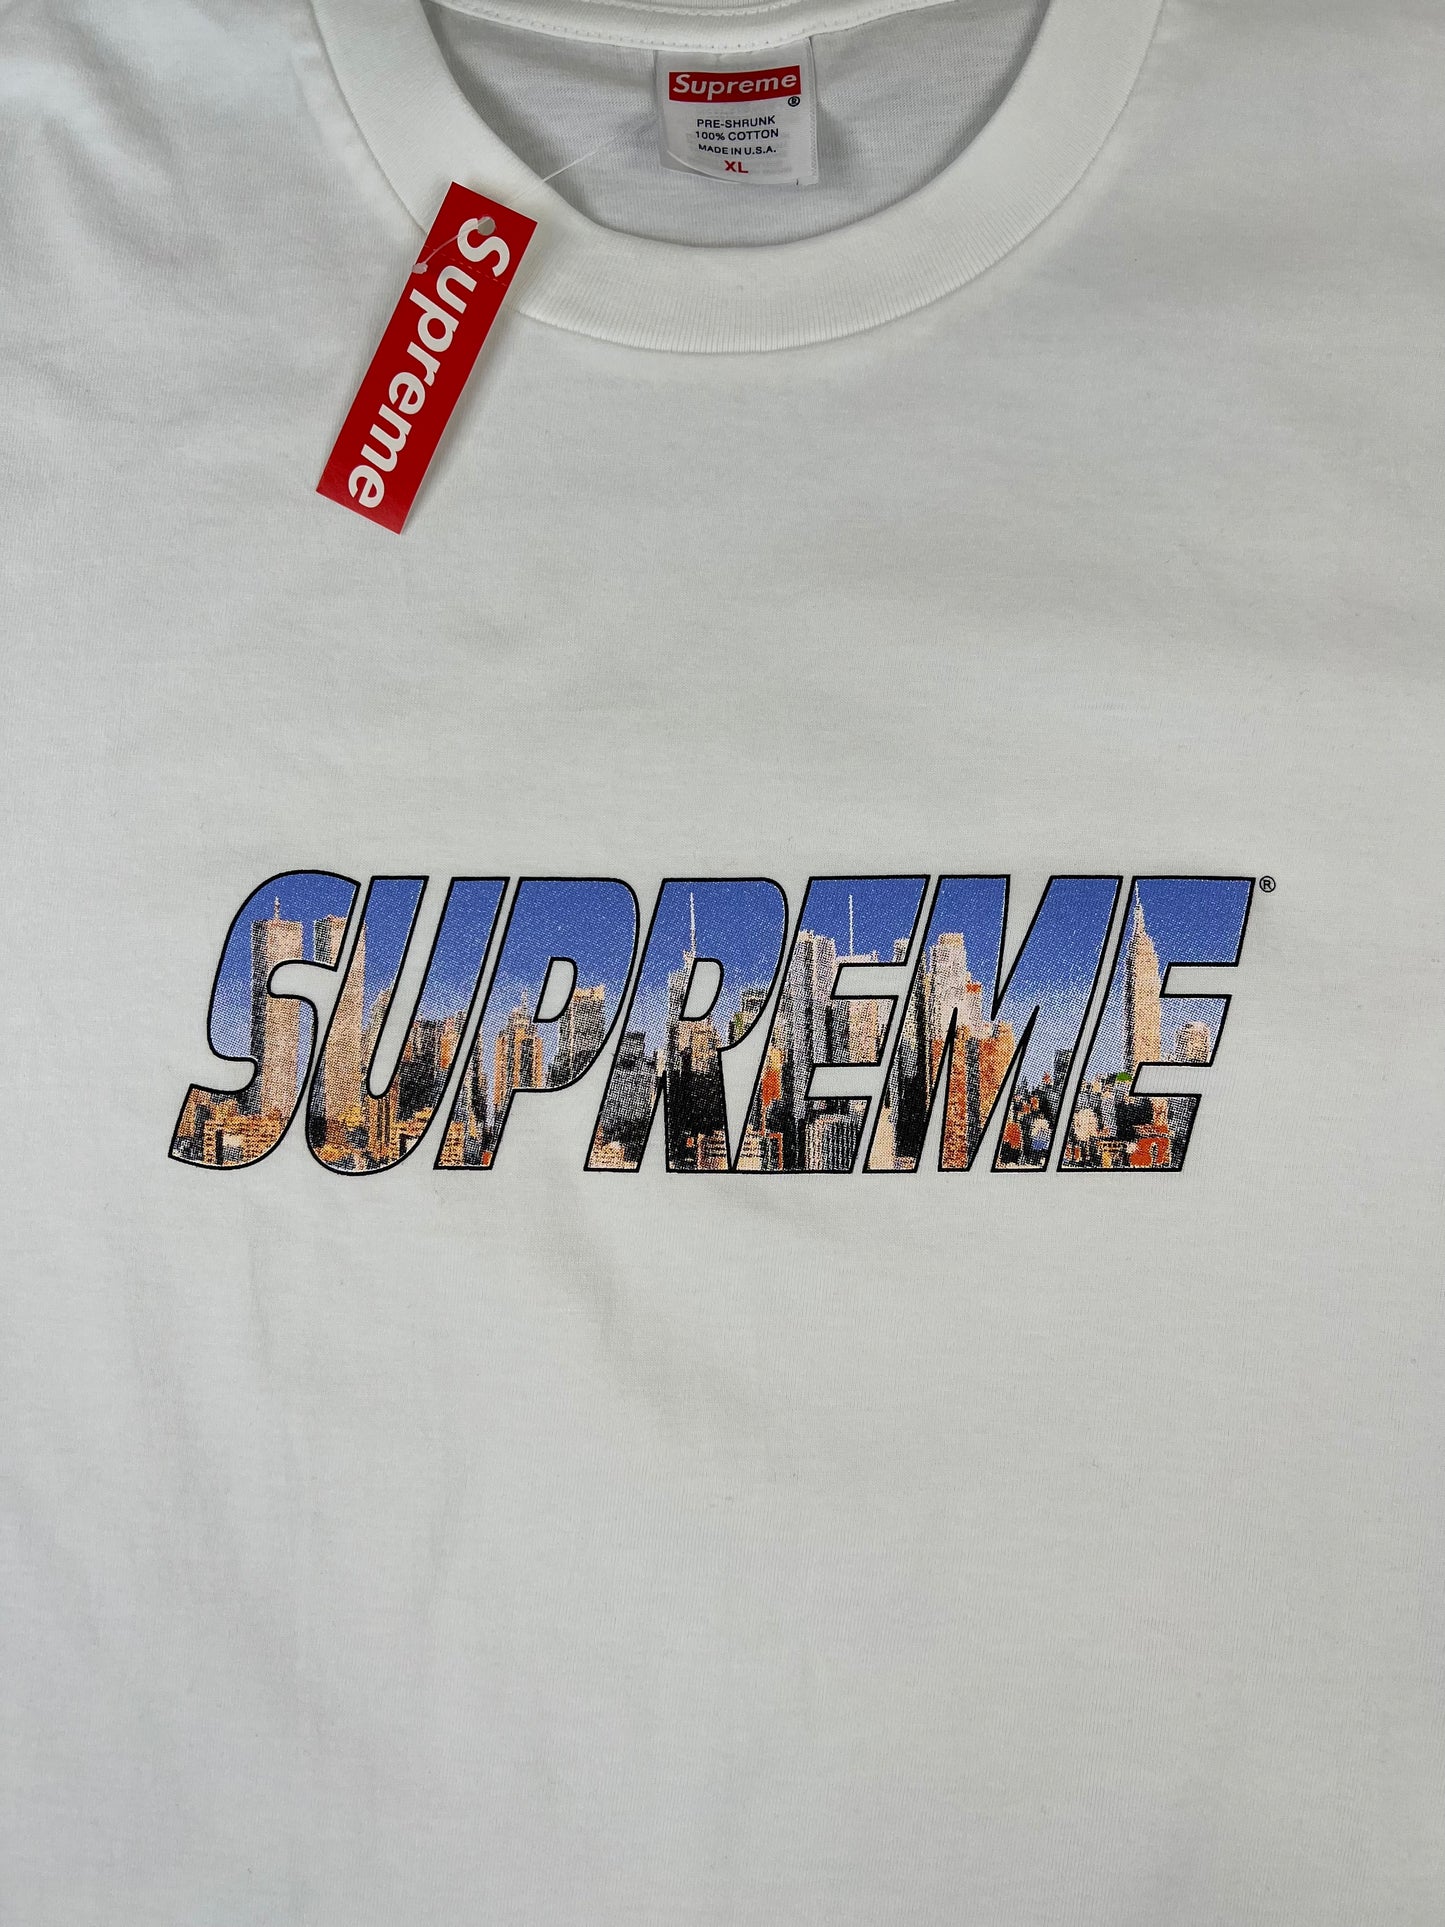 Camiseta Supreme